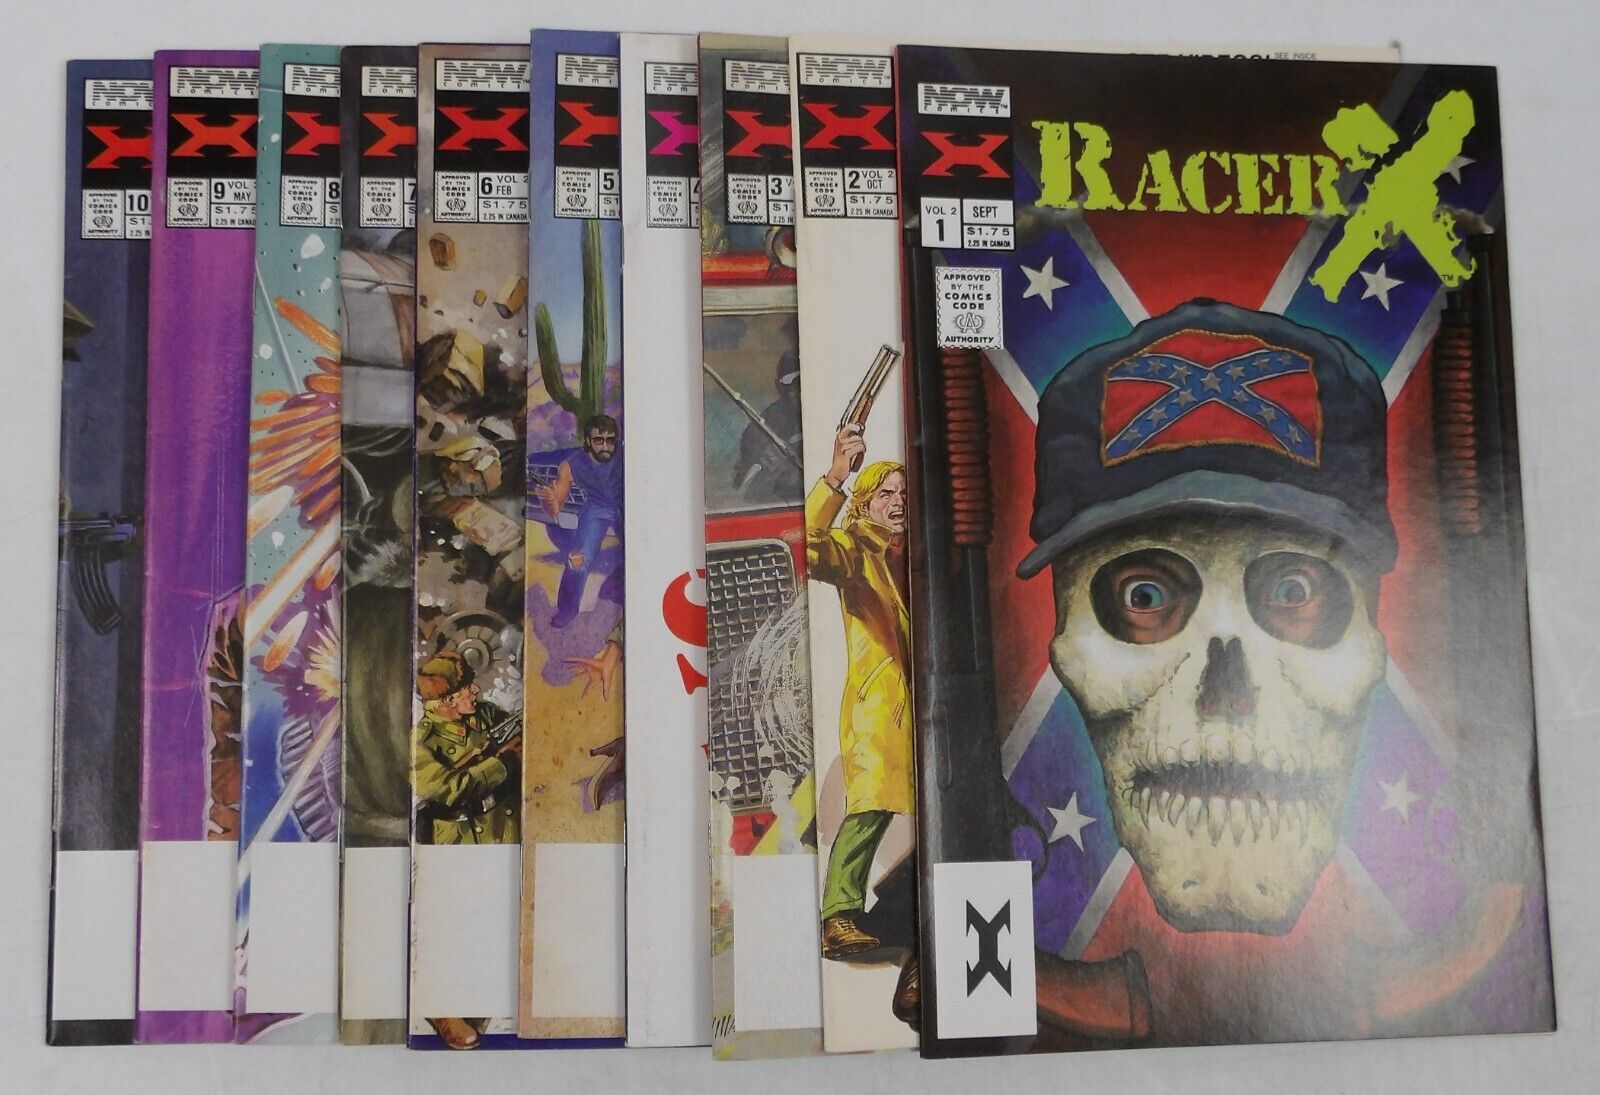 Racer X Vol. 2 #1-10 VF/NM complete series Chuck Dixon Speed Racer NOW Comics